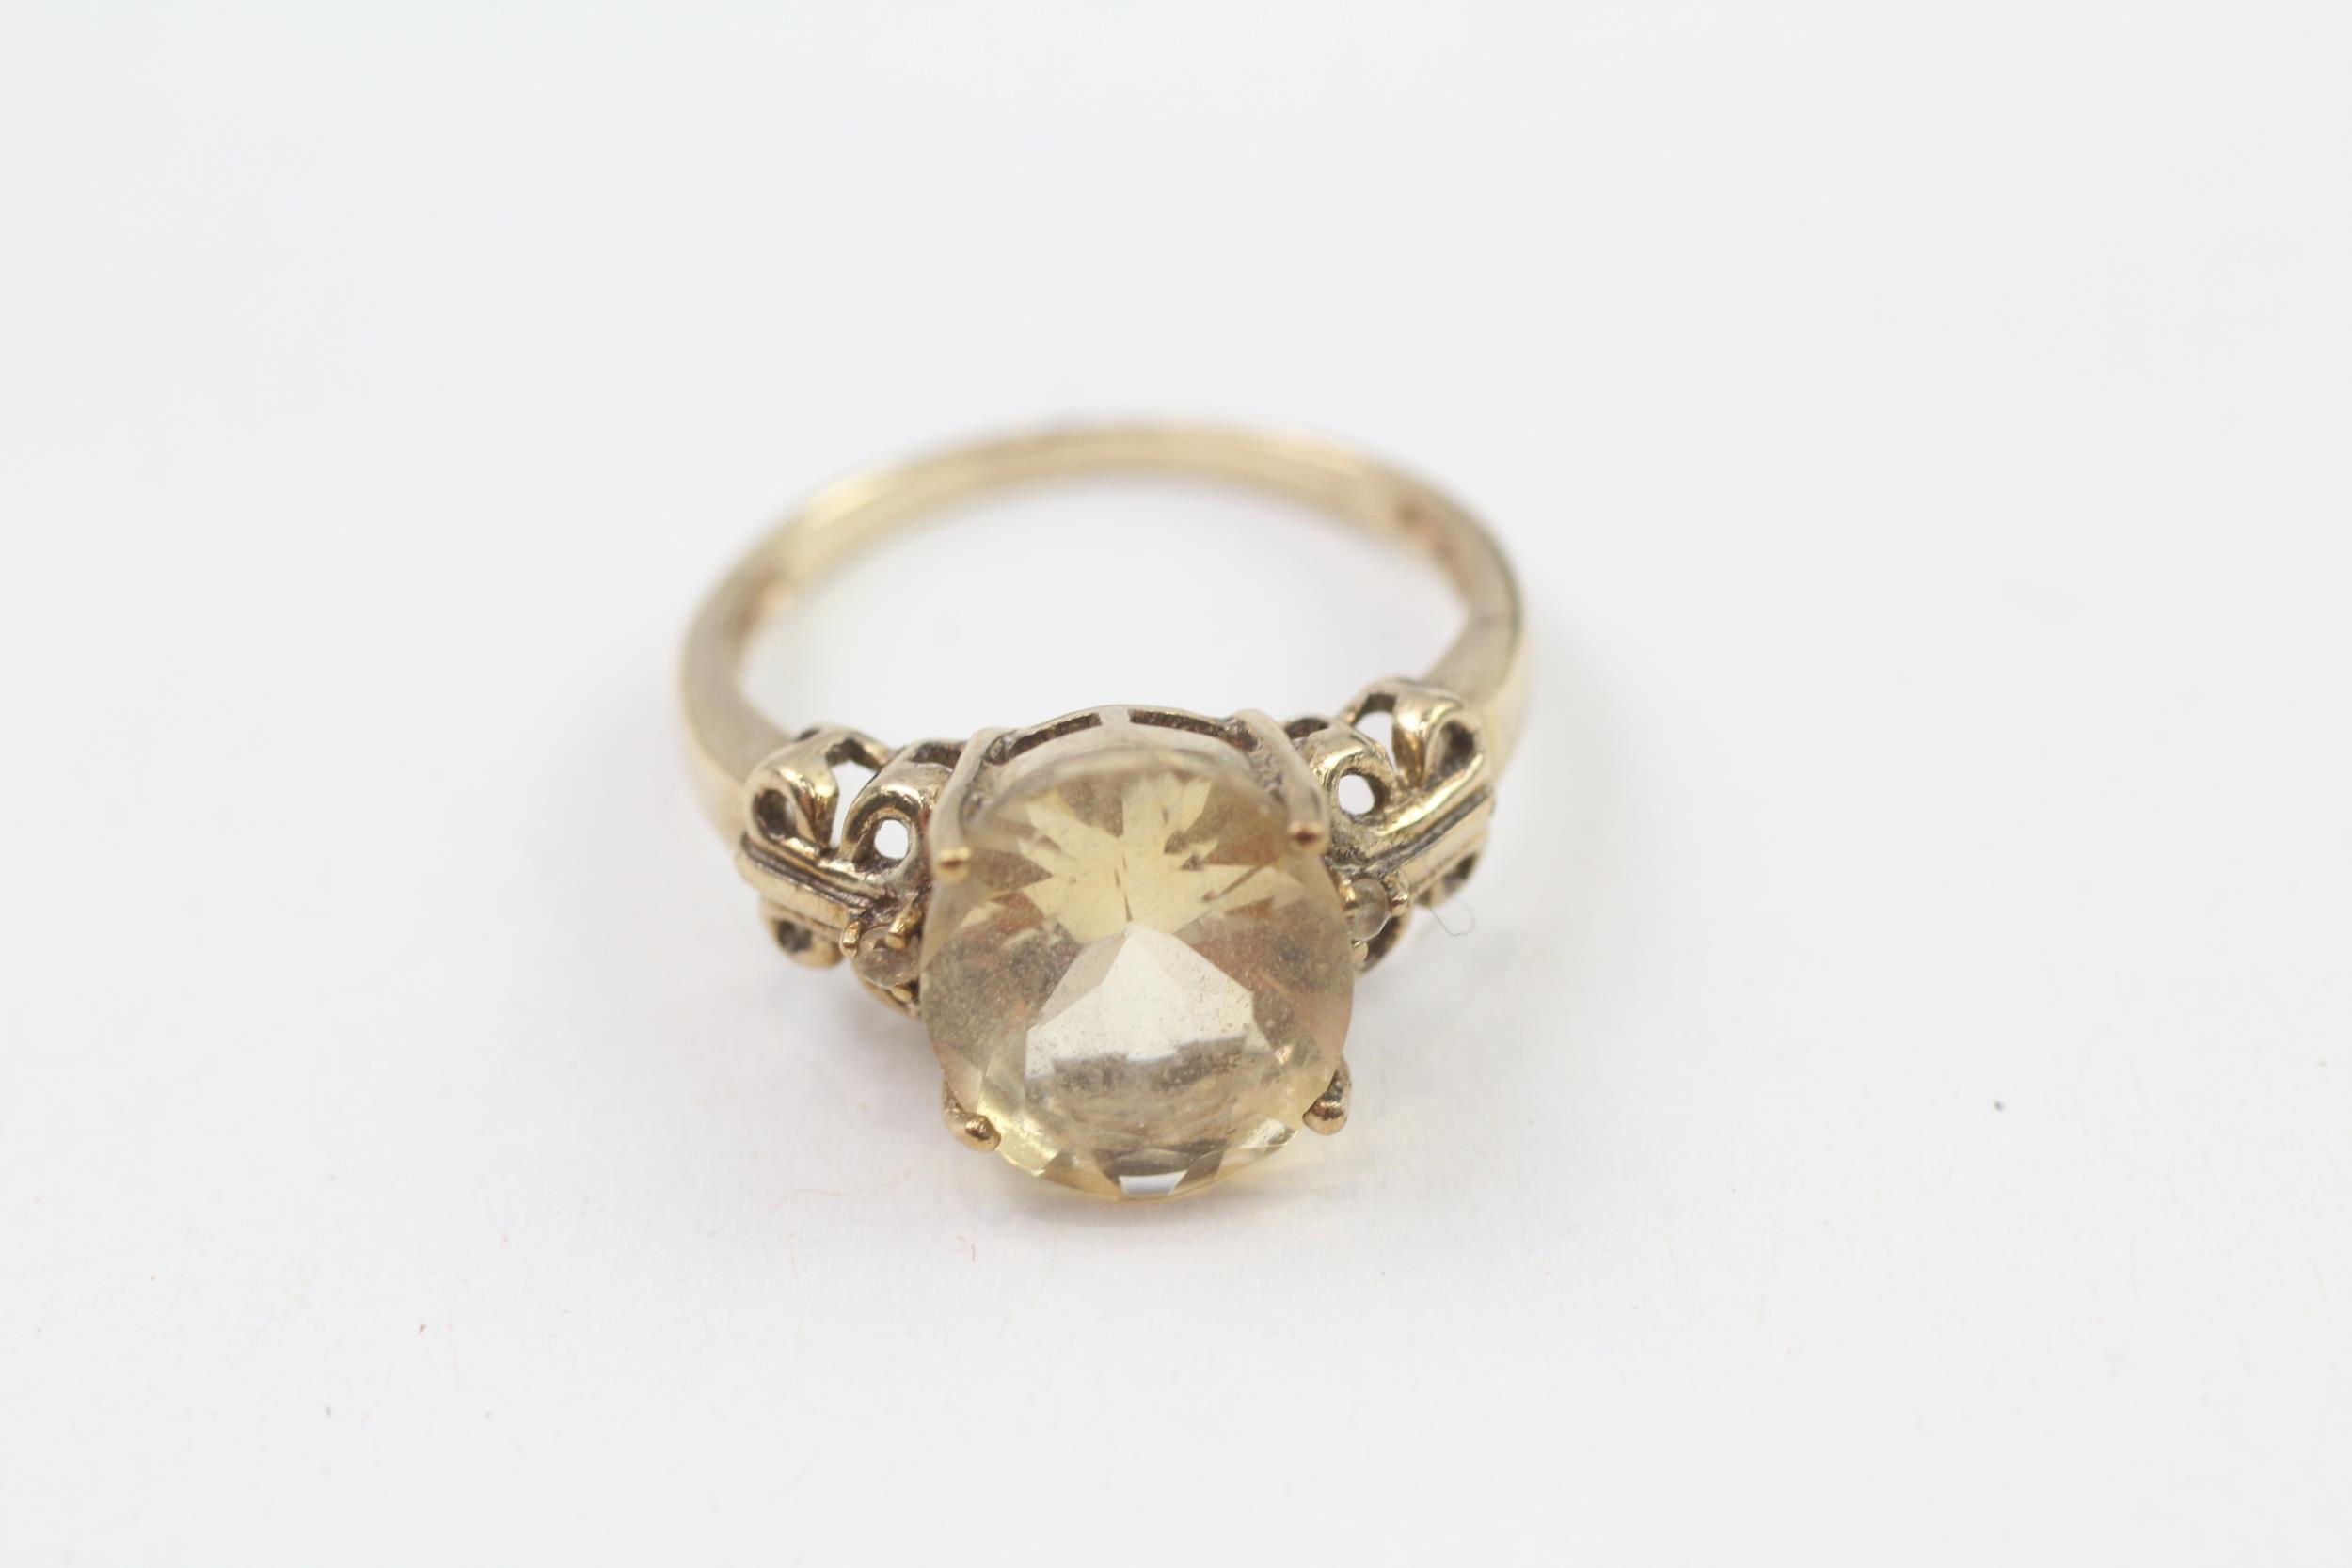 9ct gold oval cut citrine dress ring (3.7g) Size Q